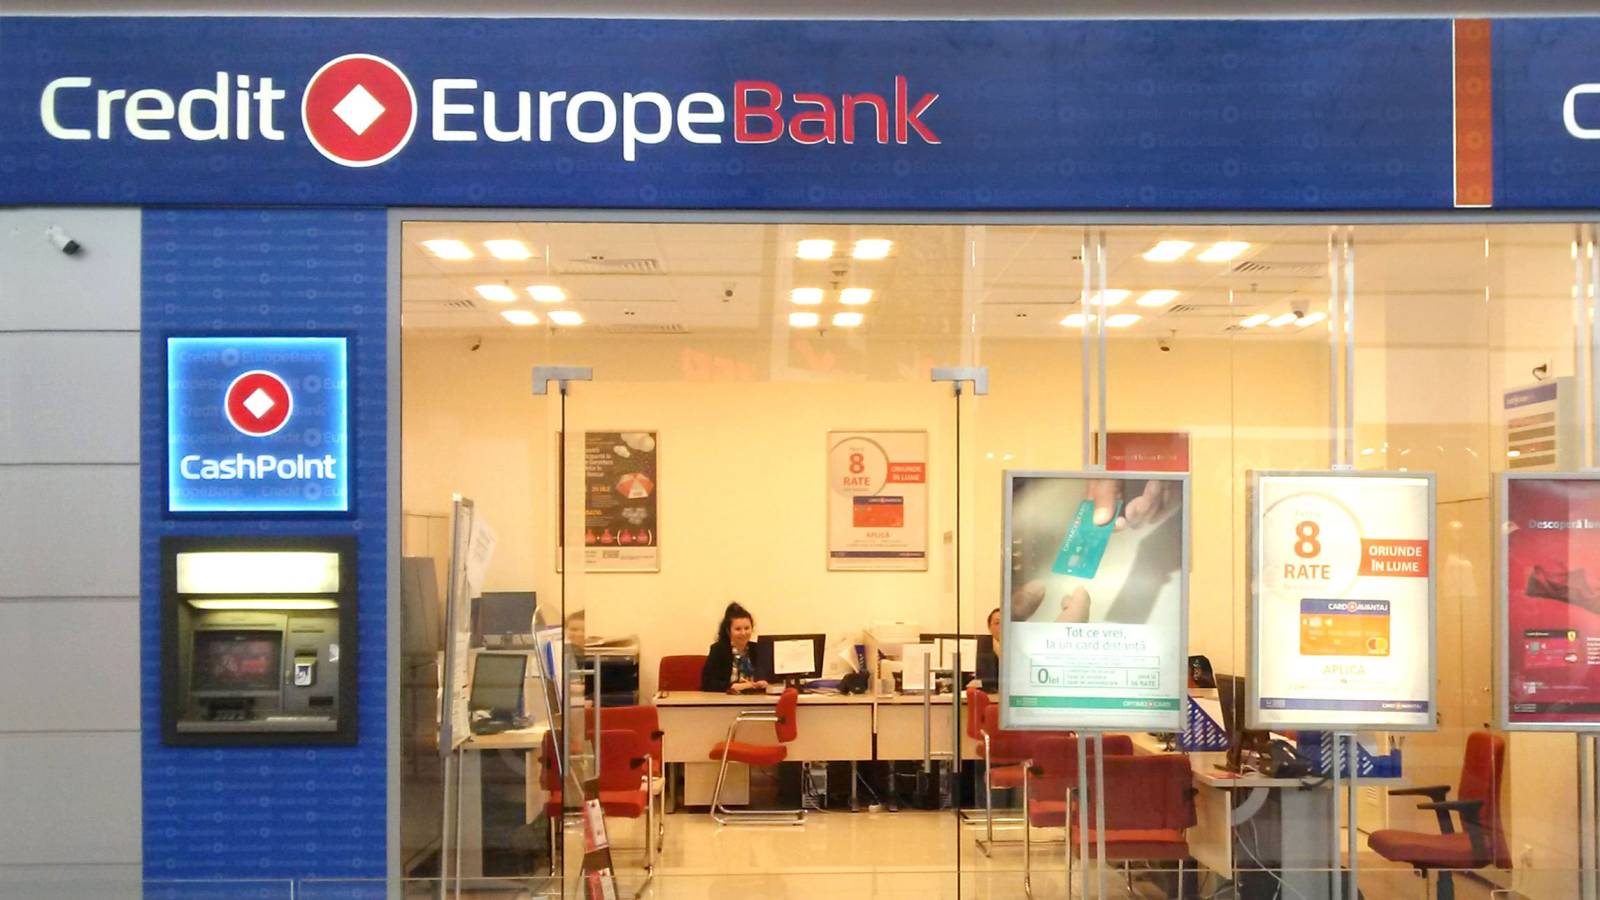 Applicazione Credit Europe Bank